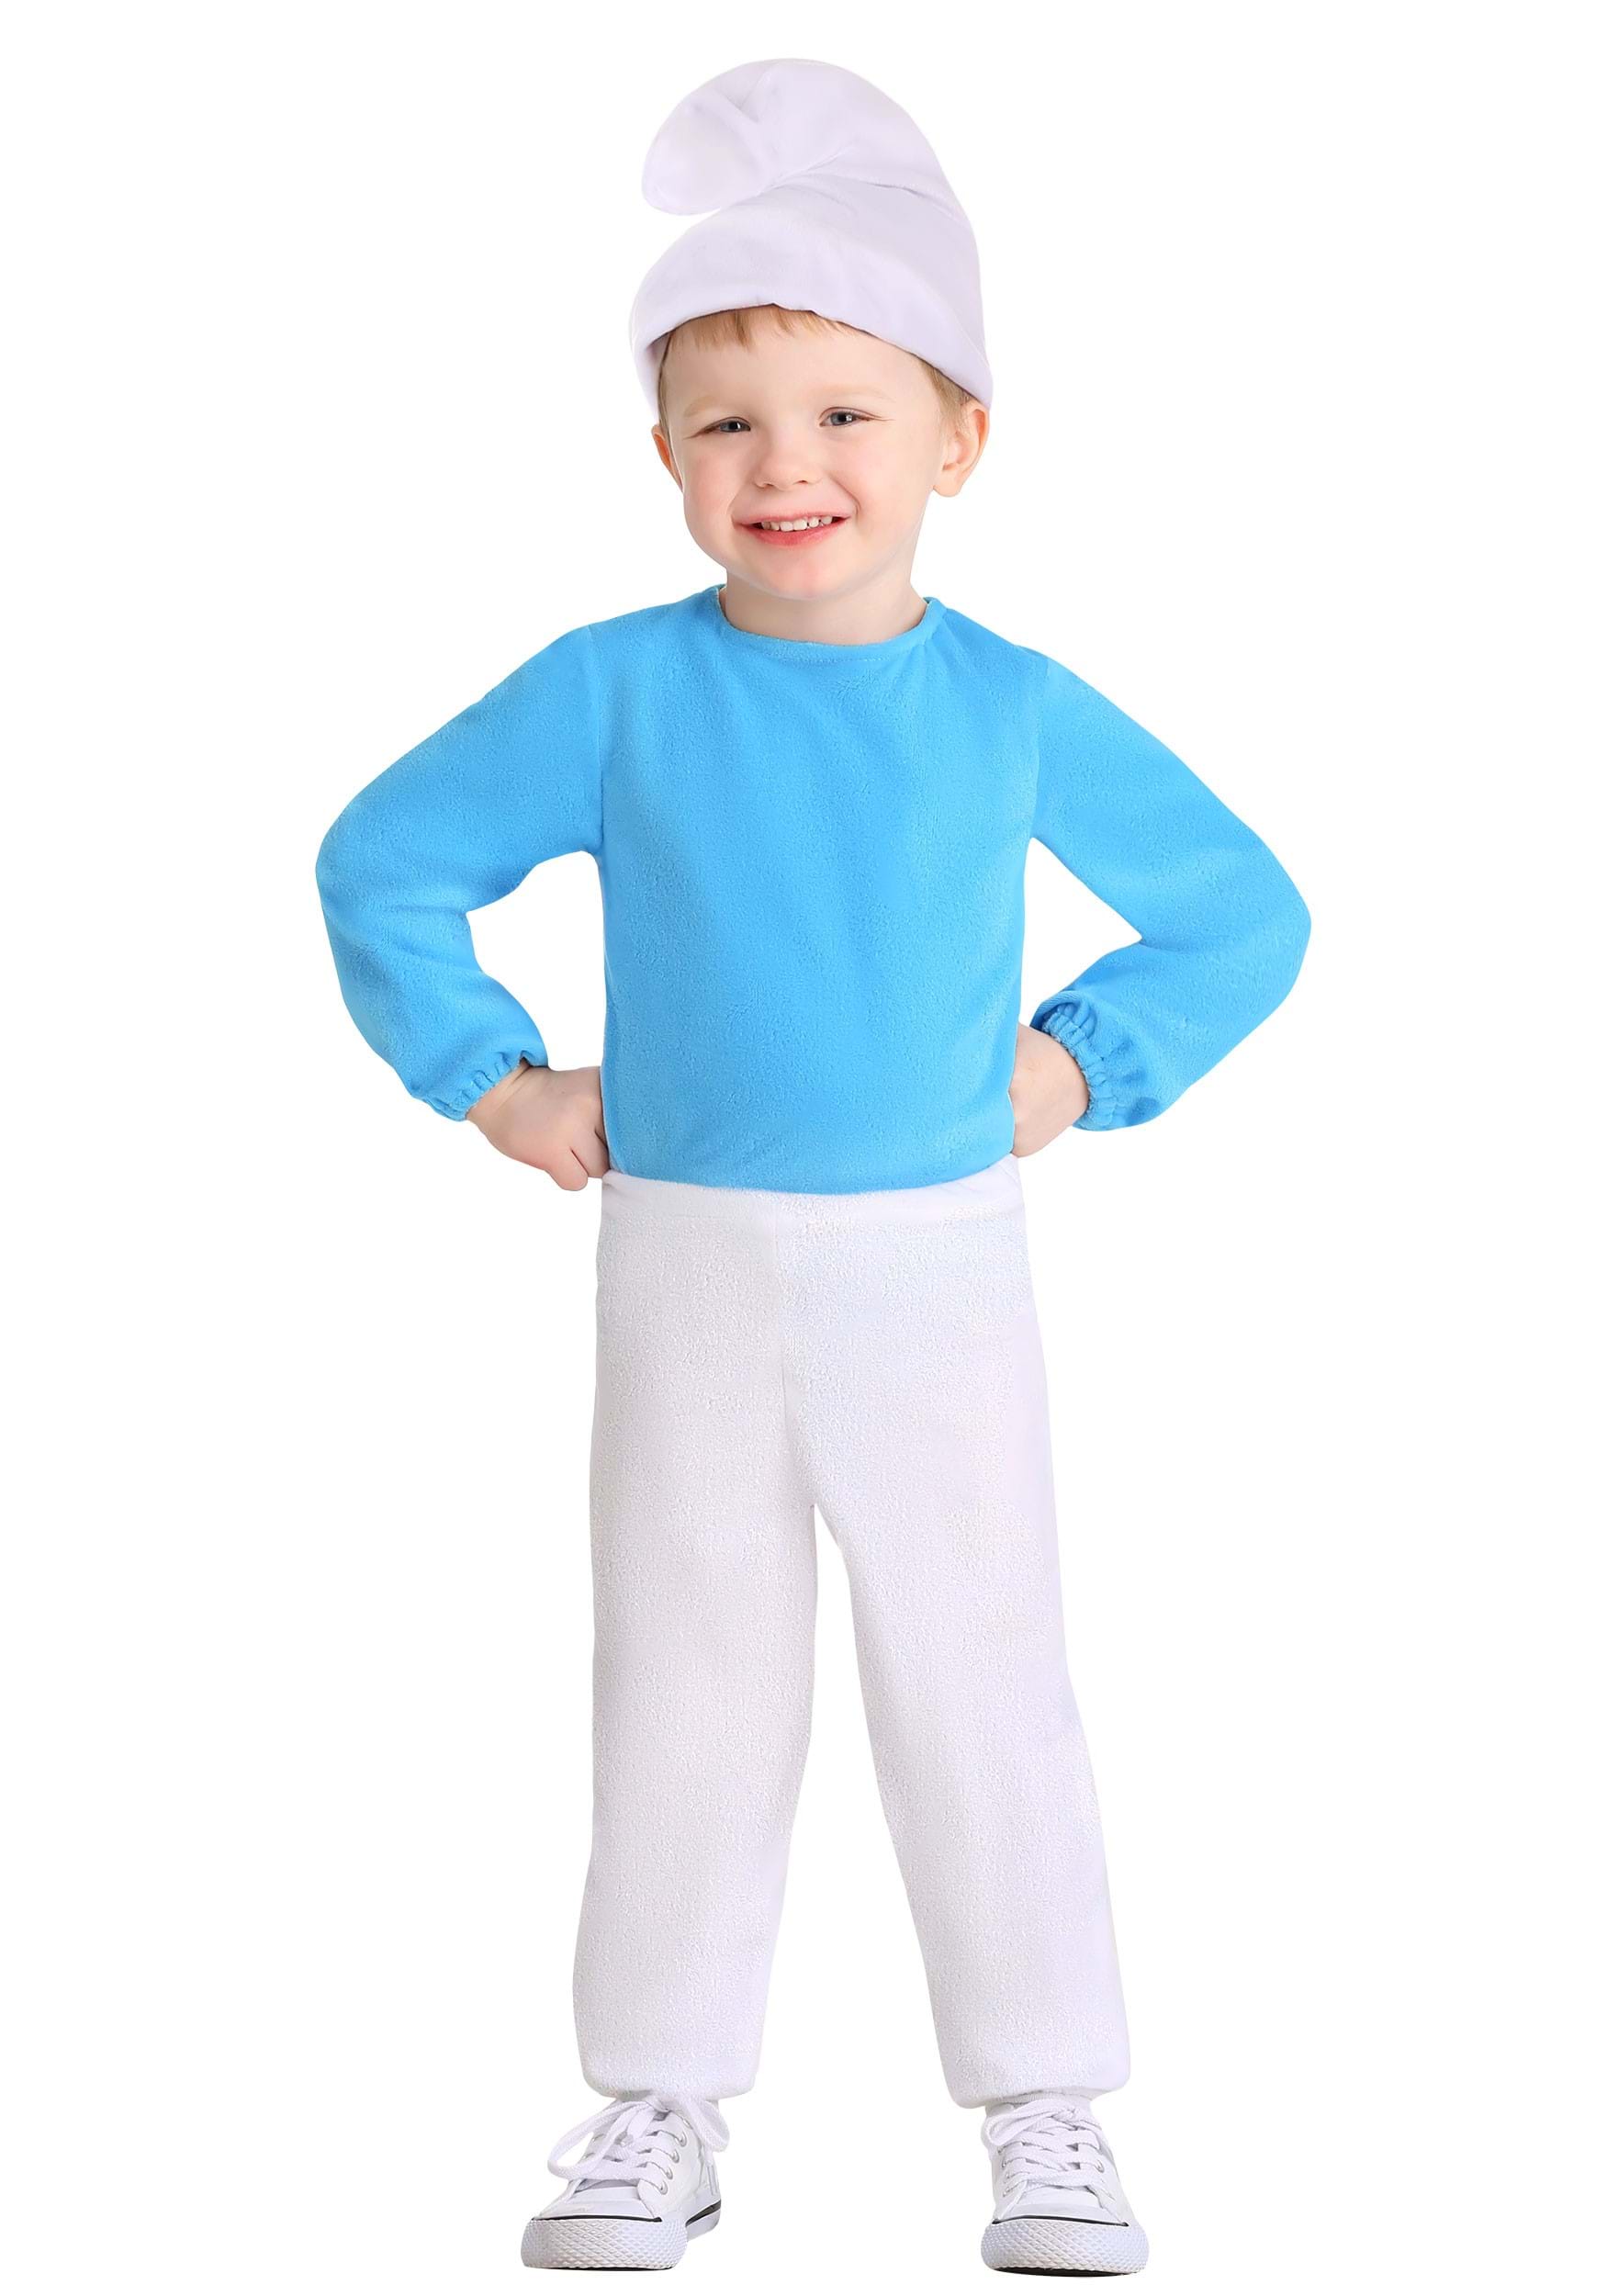 Photos - Fancy Dress Toddler FUN Costumes  The Smurfs Smurf Costume Blue/White FUN0843TD 